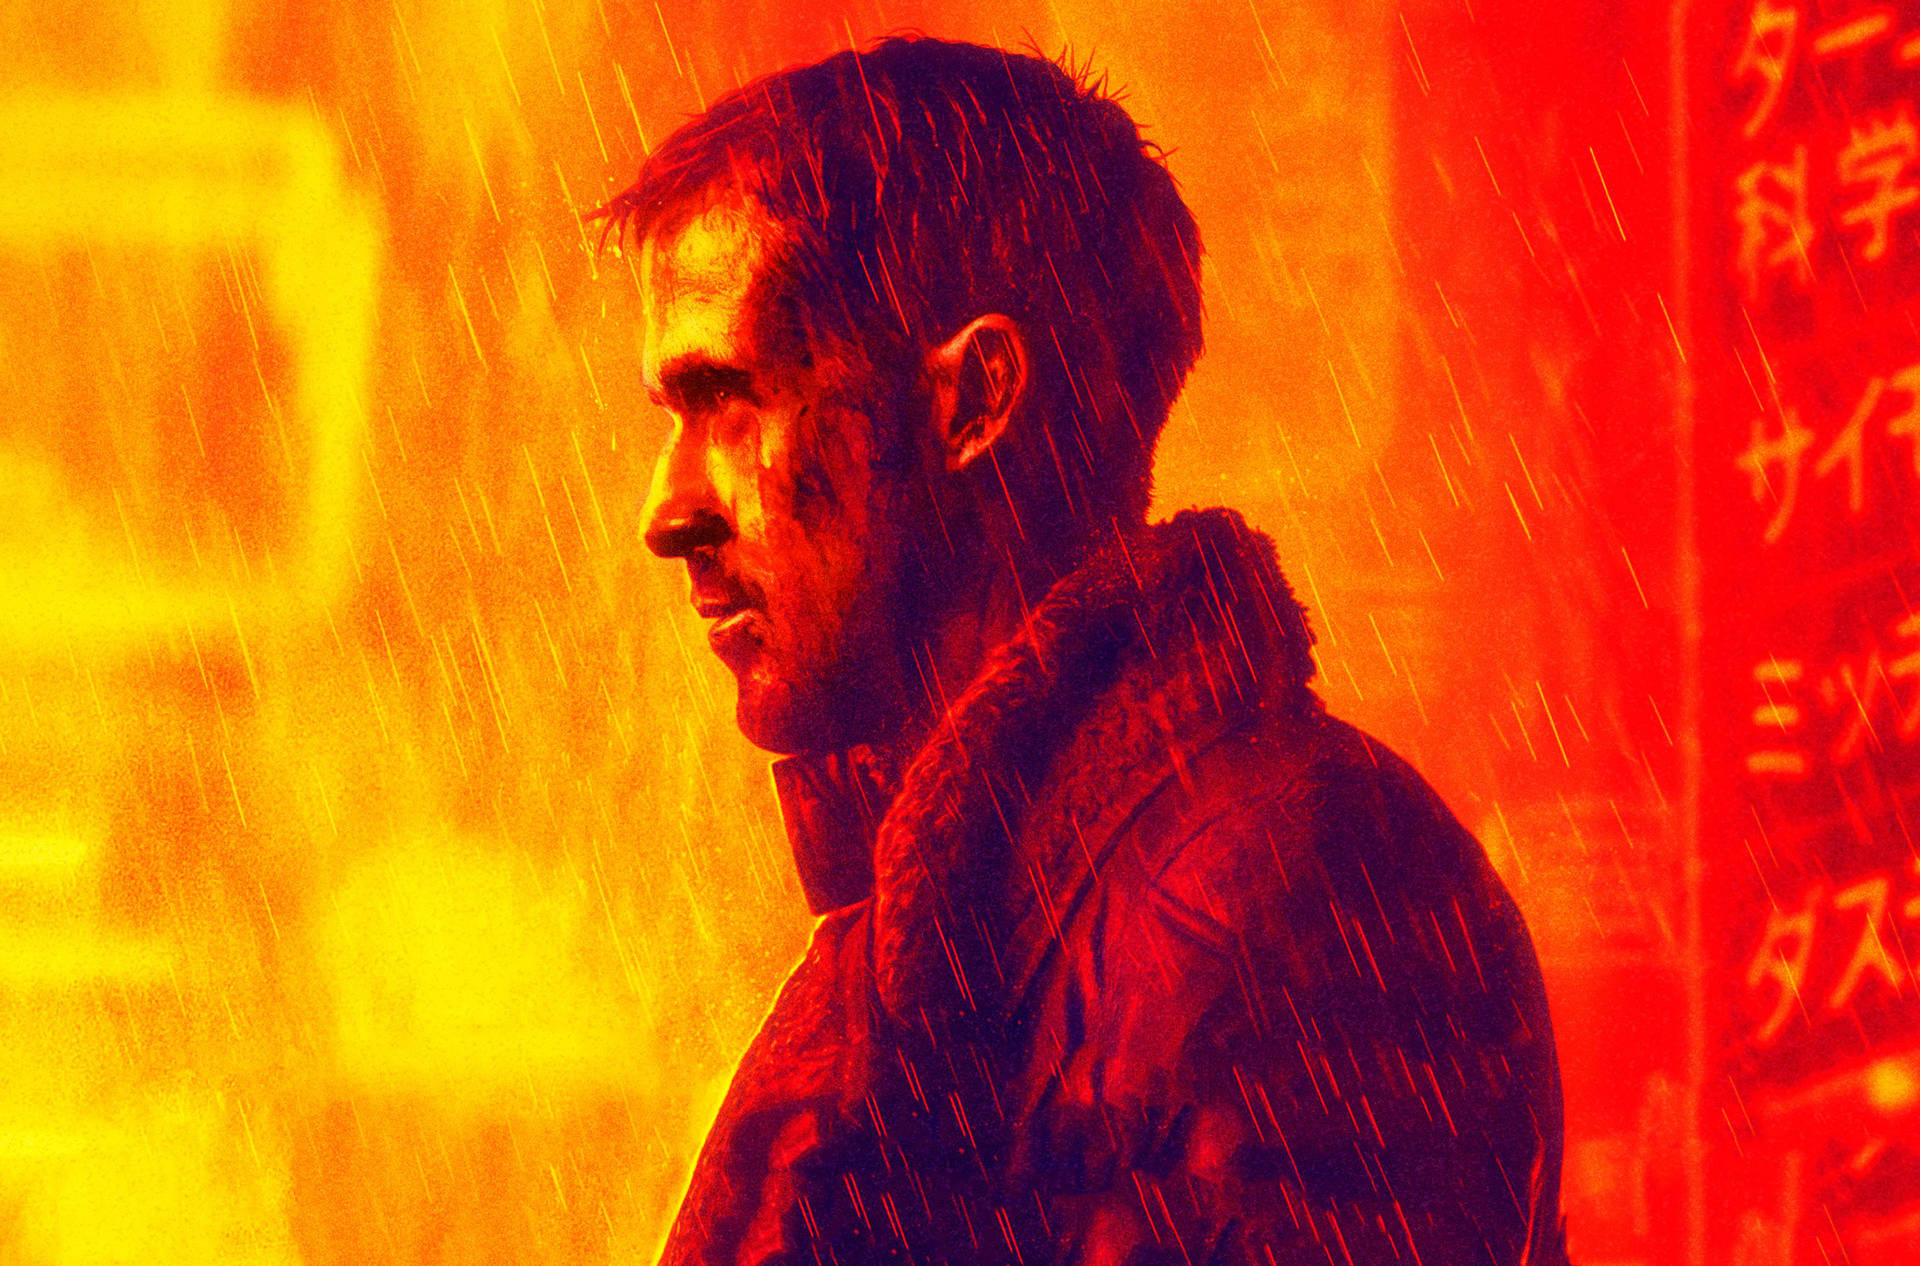 Free Blade Runner 2049 4k Wallpaper Downloads, [100+] Blade Runner 2049 4k  Wallpapers for FREE 